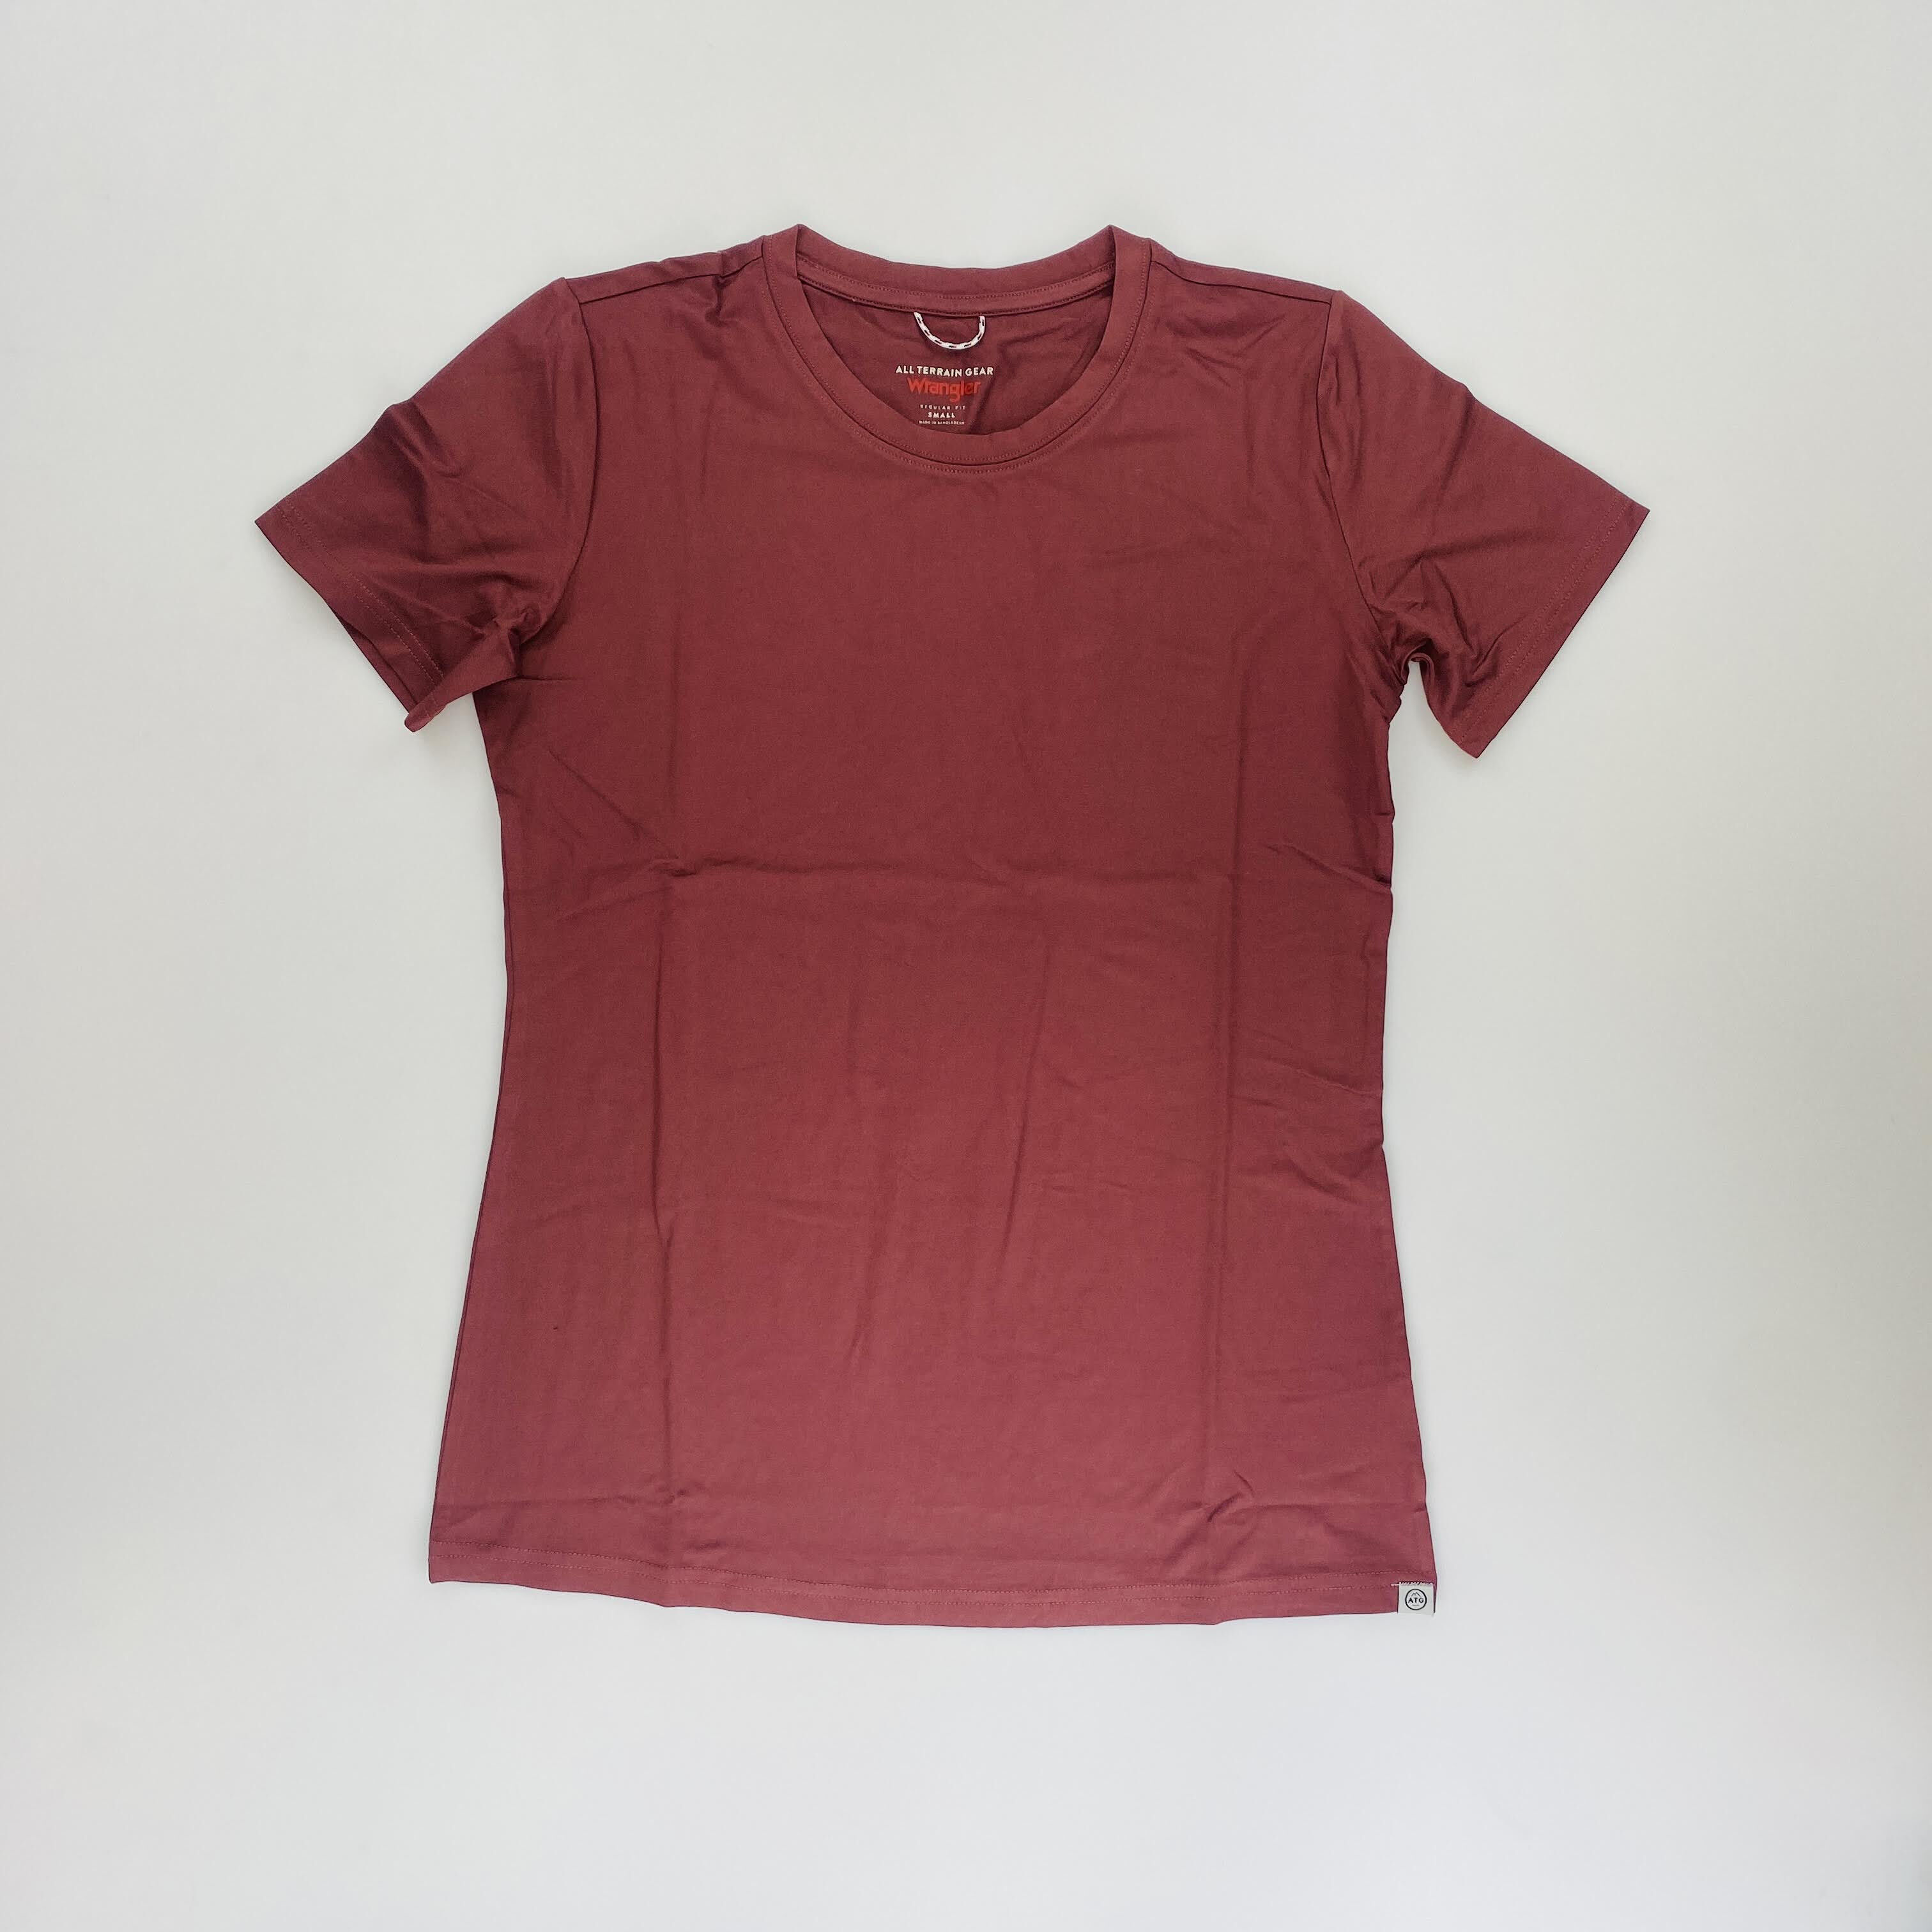 Wrangler Performance T Shirt - T-shirt di seconda mano - Donna - Rosso - M | Hardloop